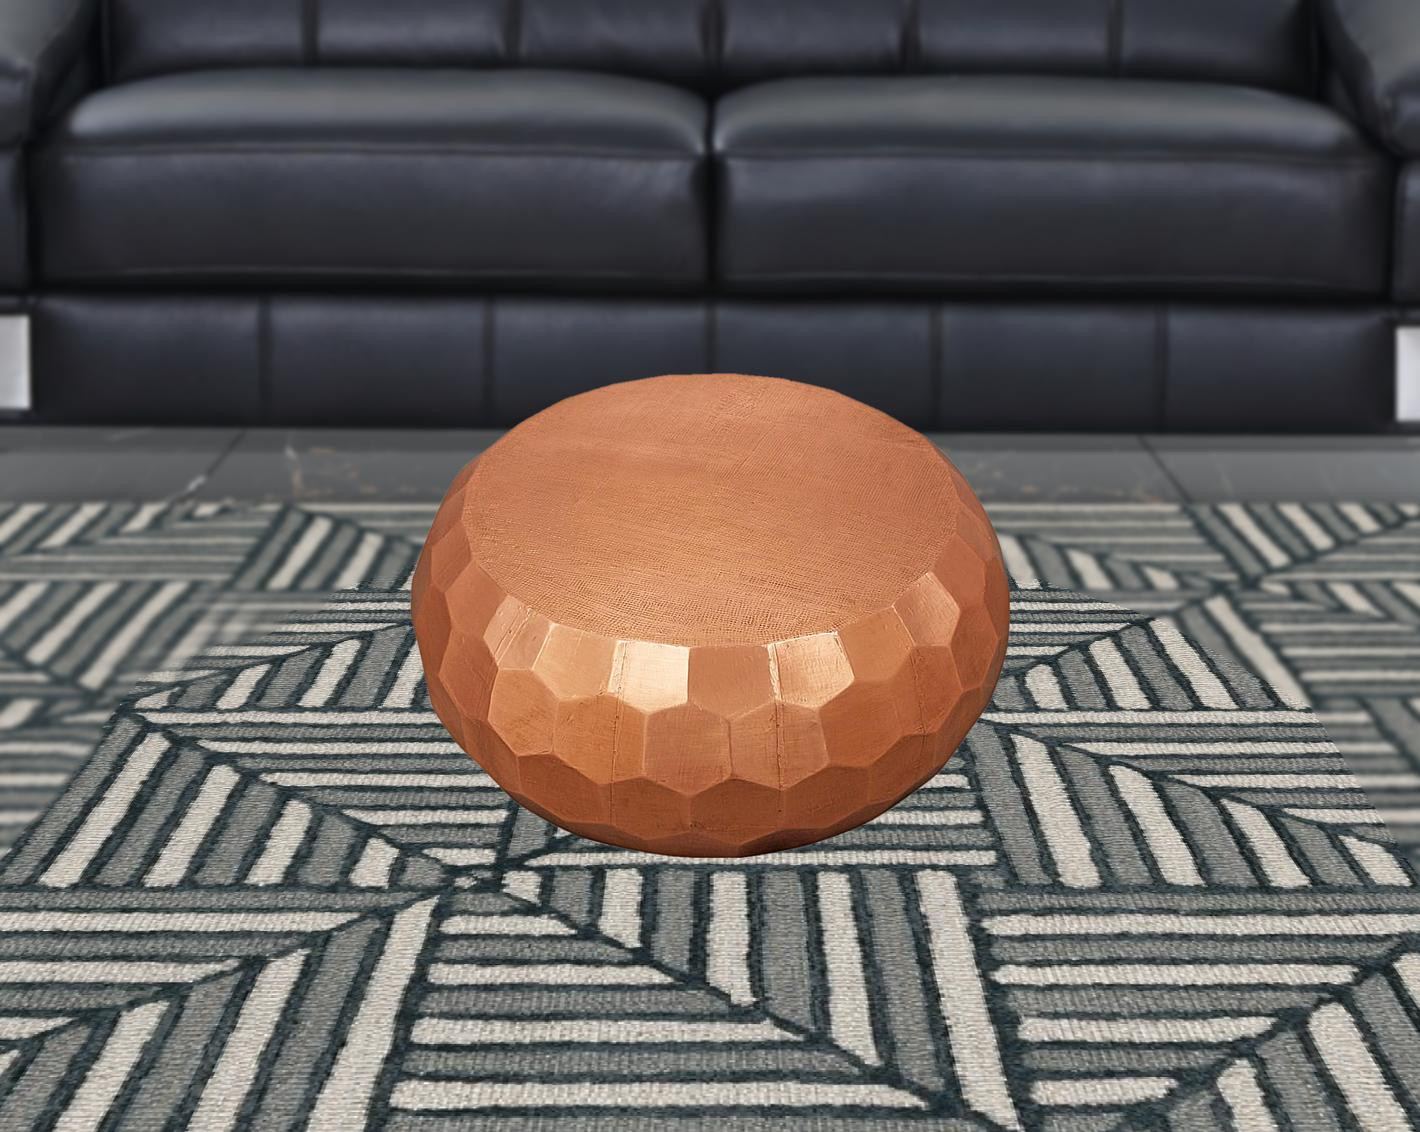 "28"" Rustic Copper Brass Hexagon Coffee Table"